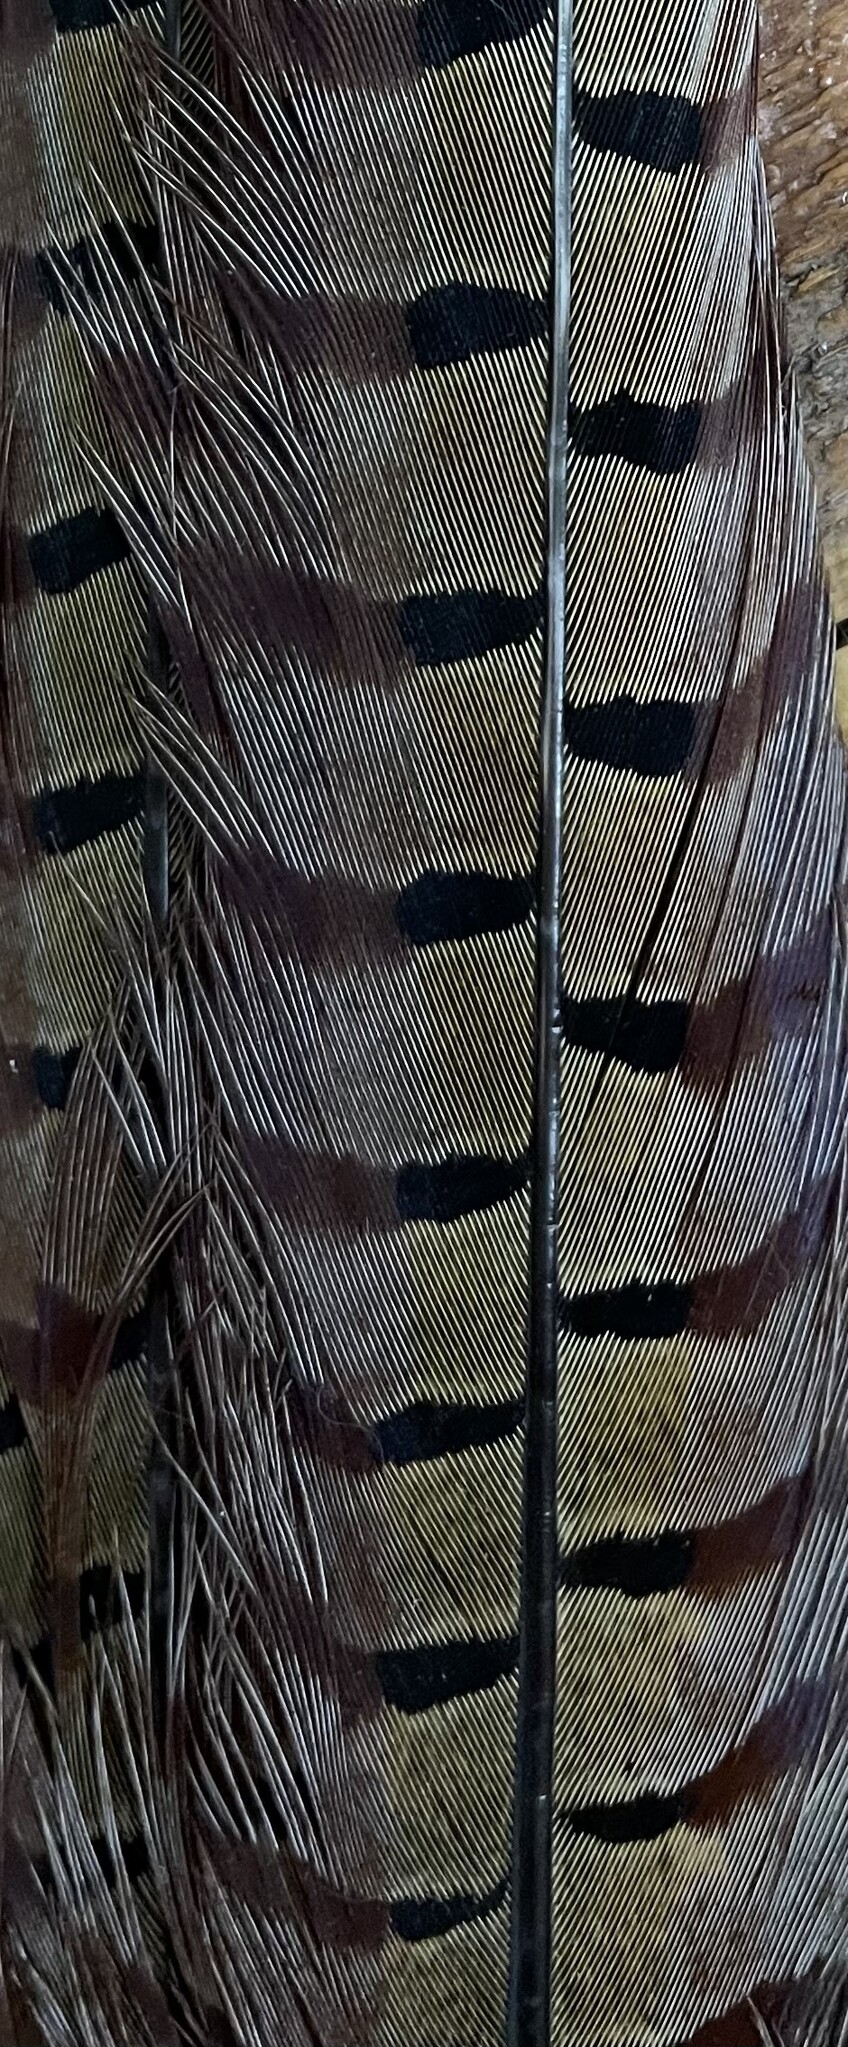 Pheasant Tail Clumps